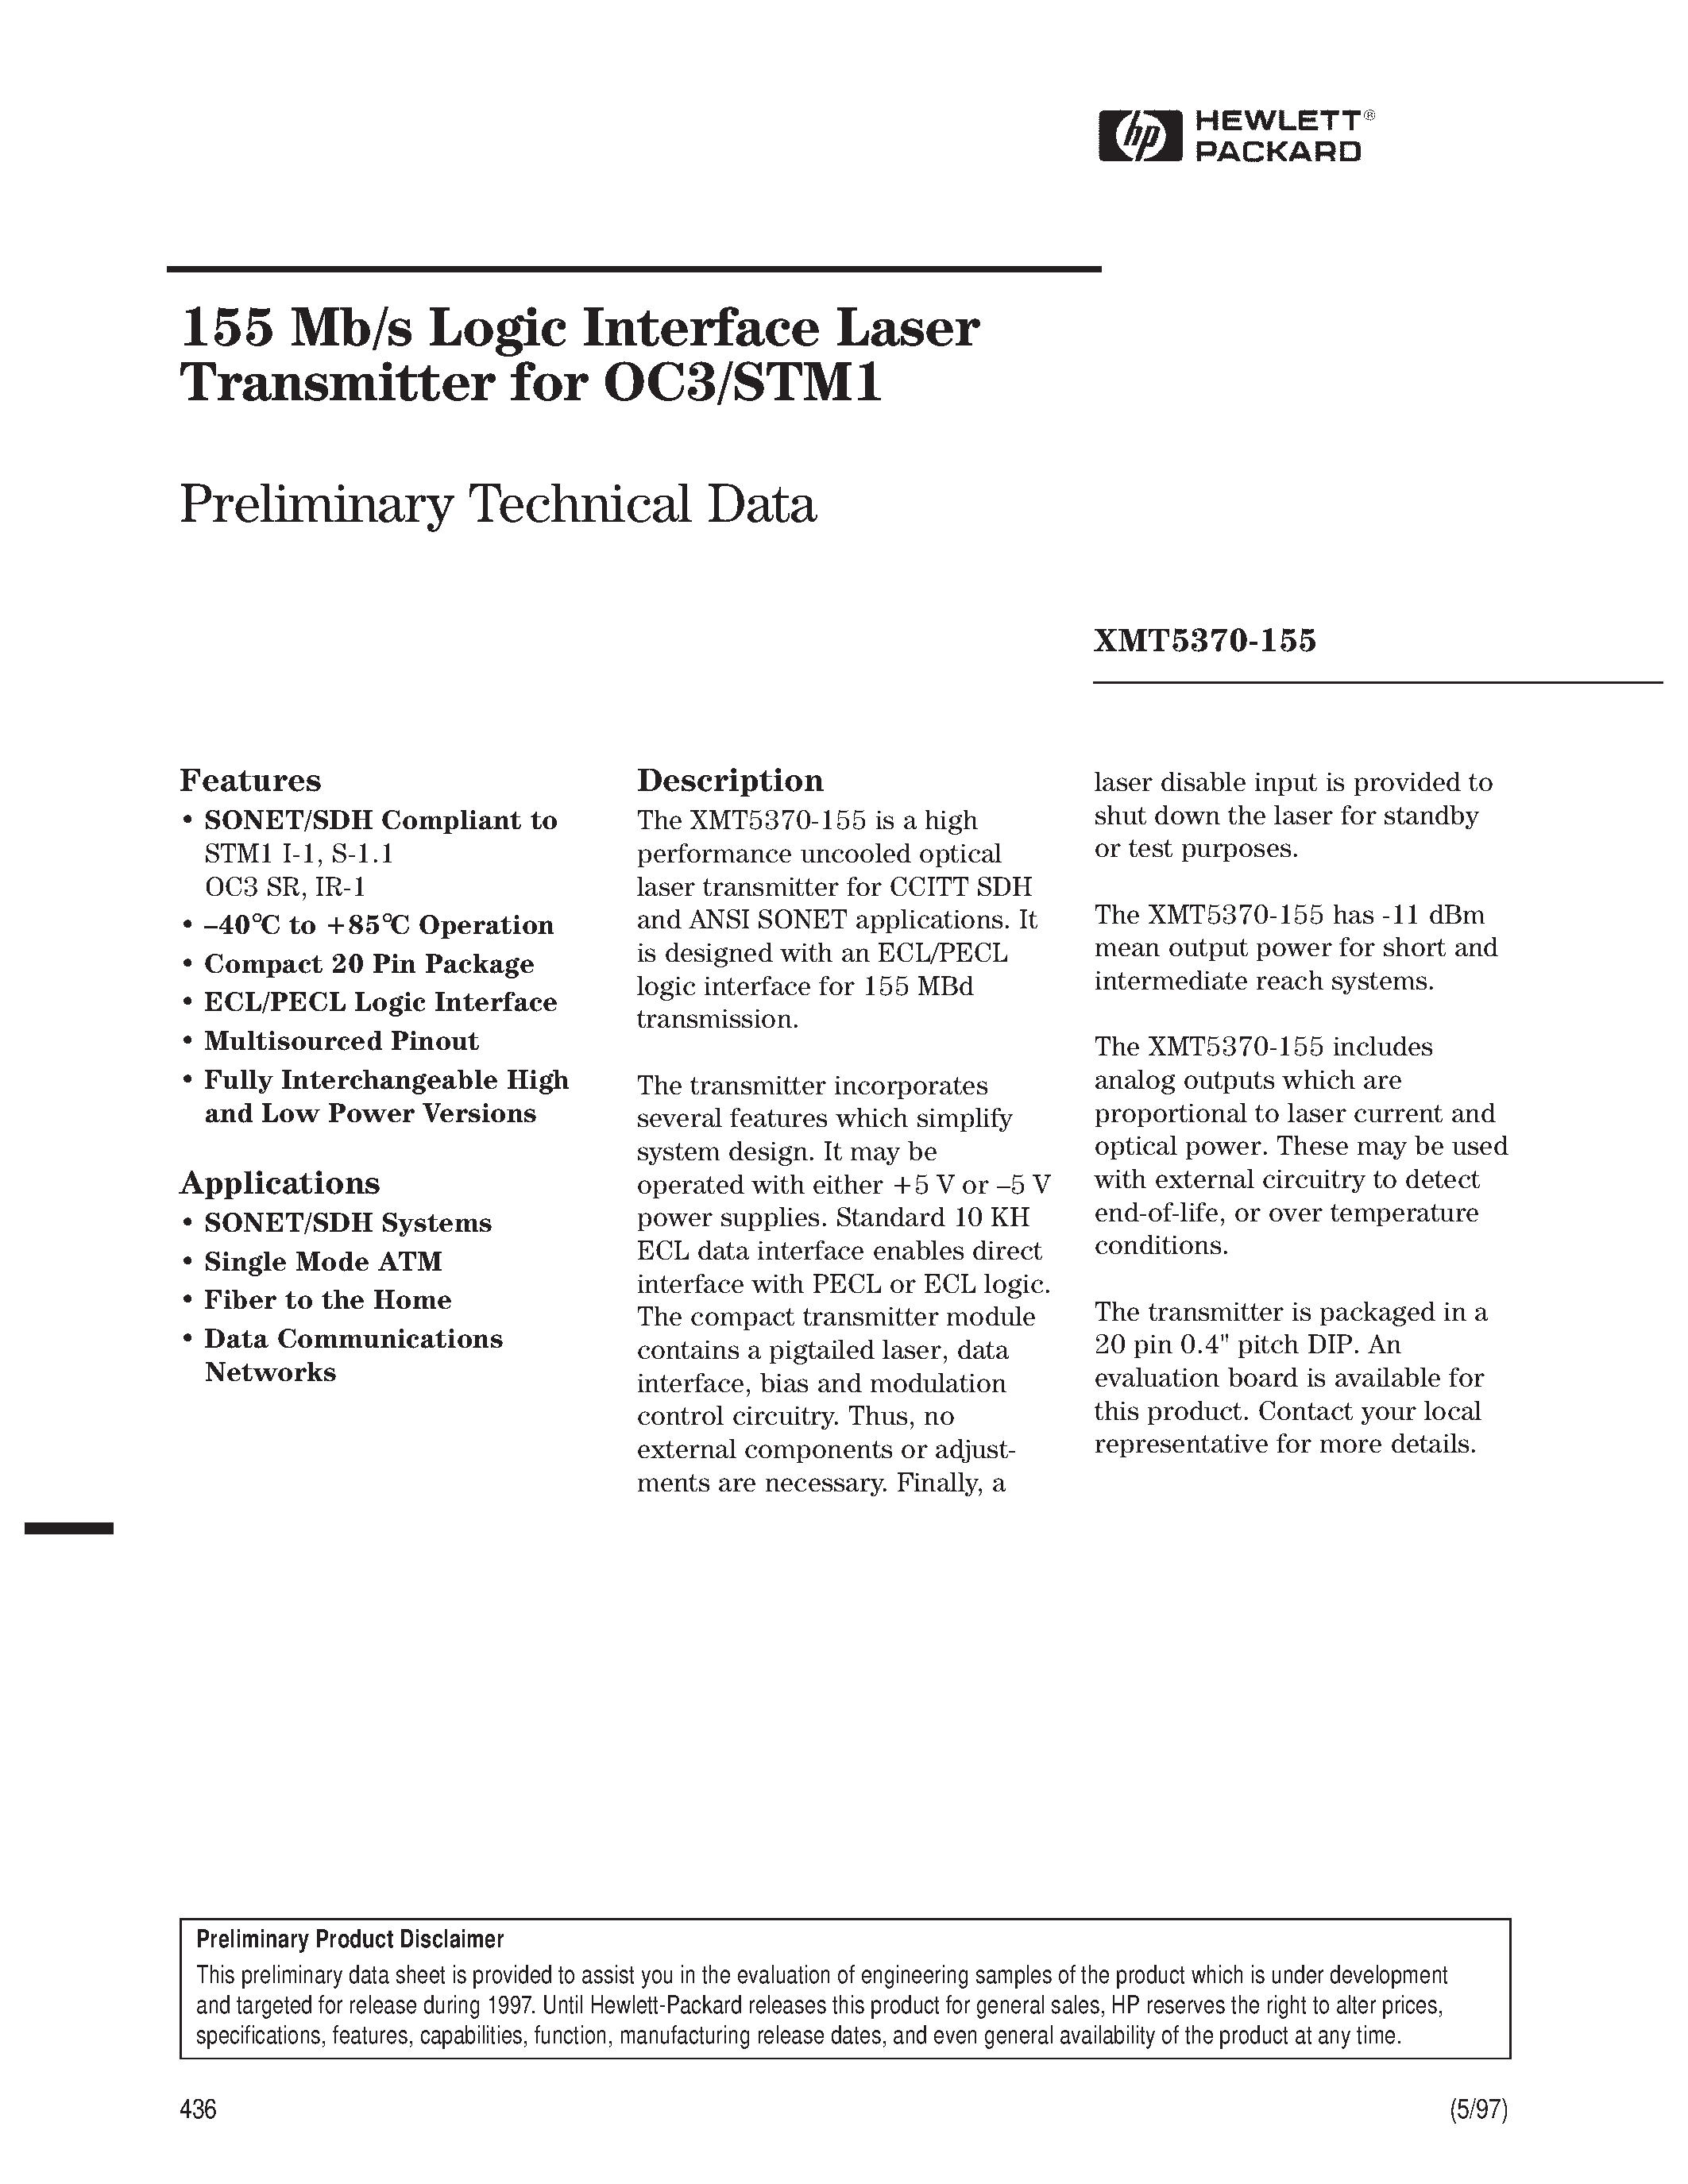 Datasheet XMT5370B-155-SC - 155 Mb/s Logic Interface Laser Transmitter for OC3/STM1 page 1